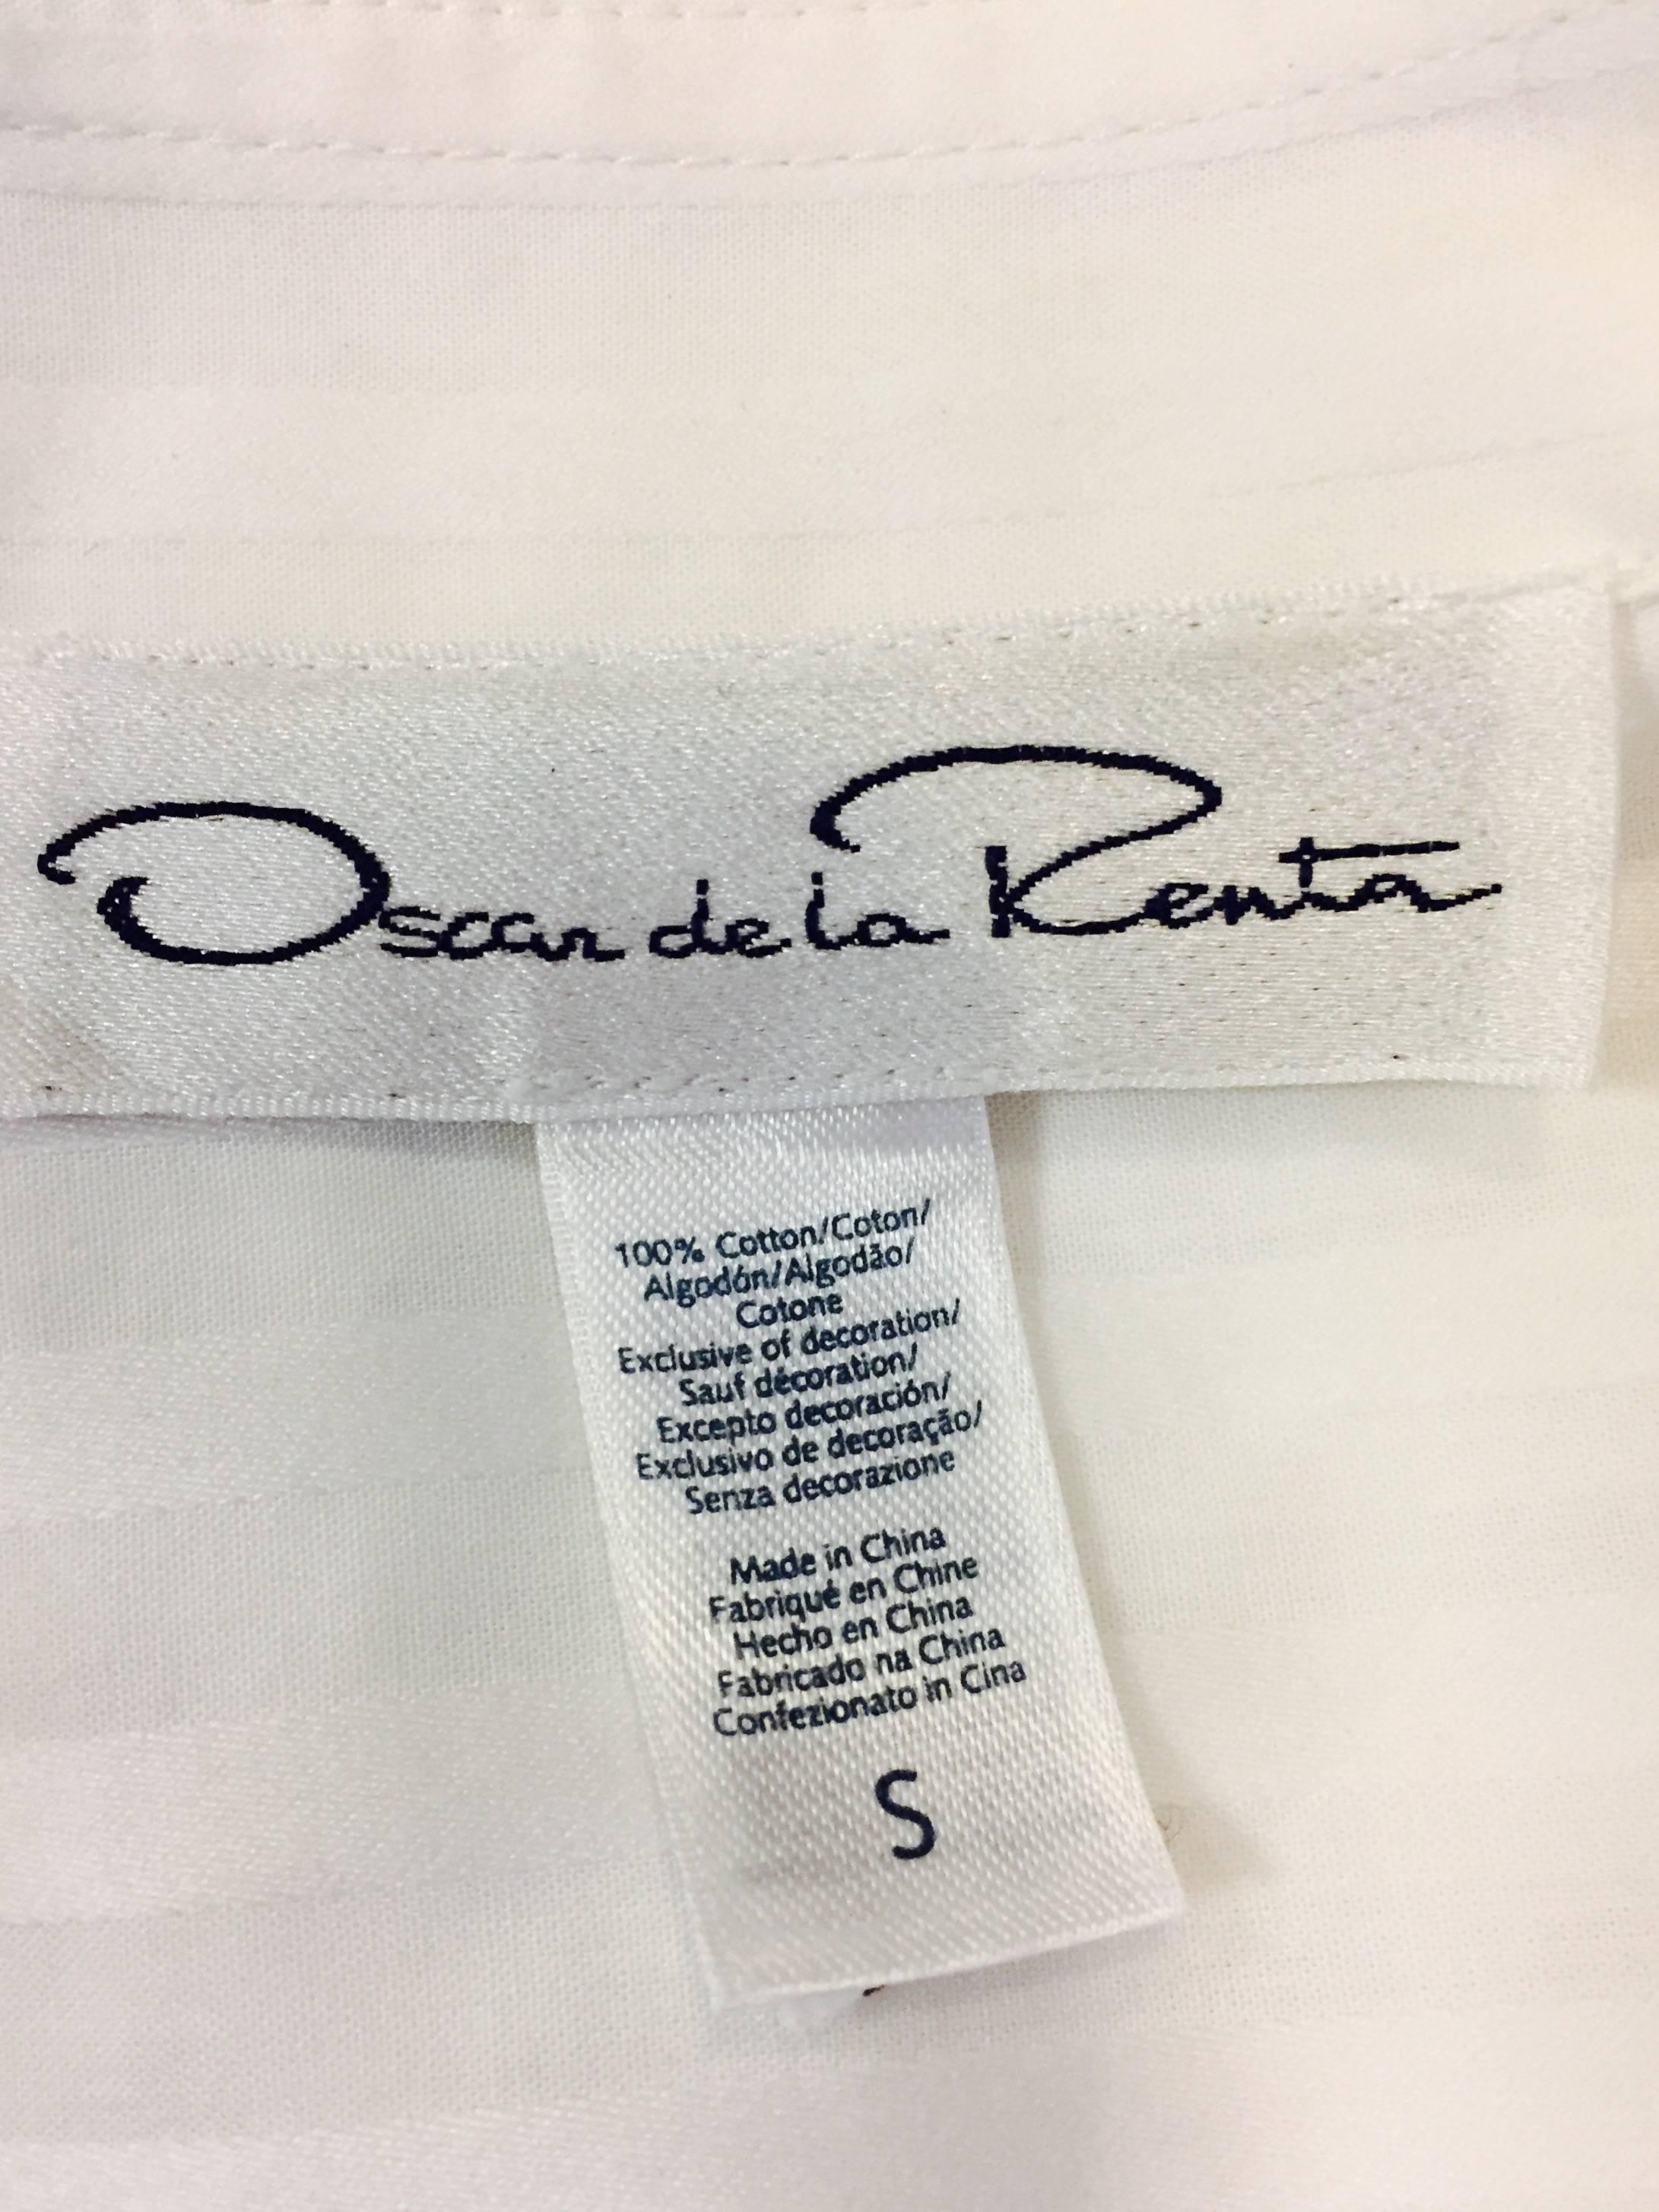 Outstanding Oscar de la Renta Beach Cover Up in White on White Cotton For Sale 1